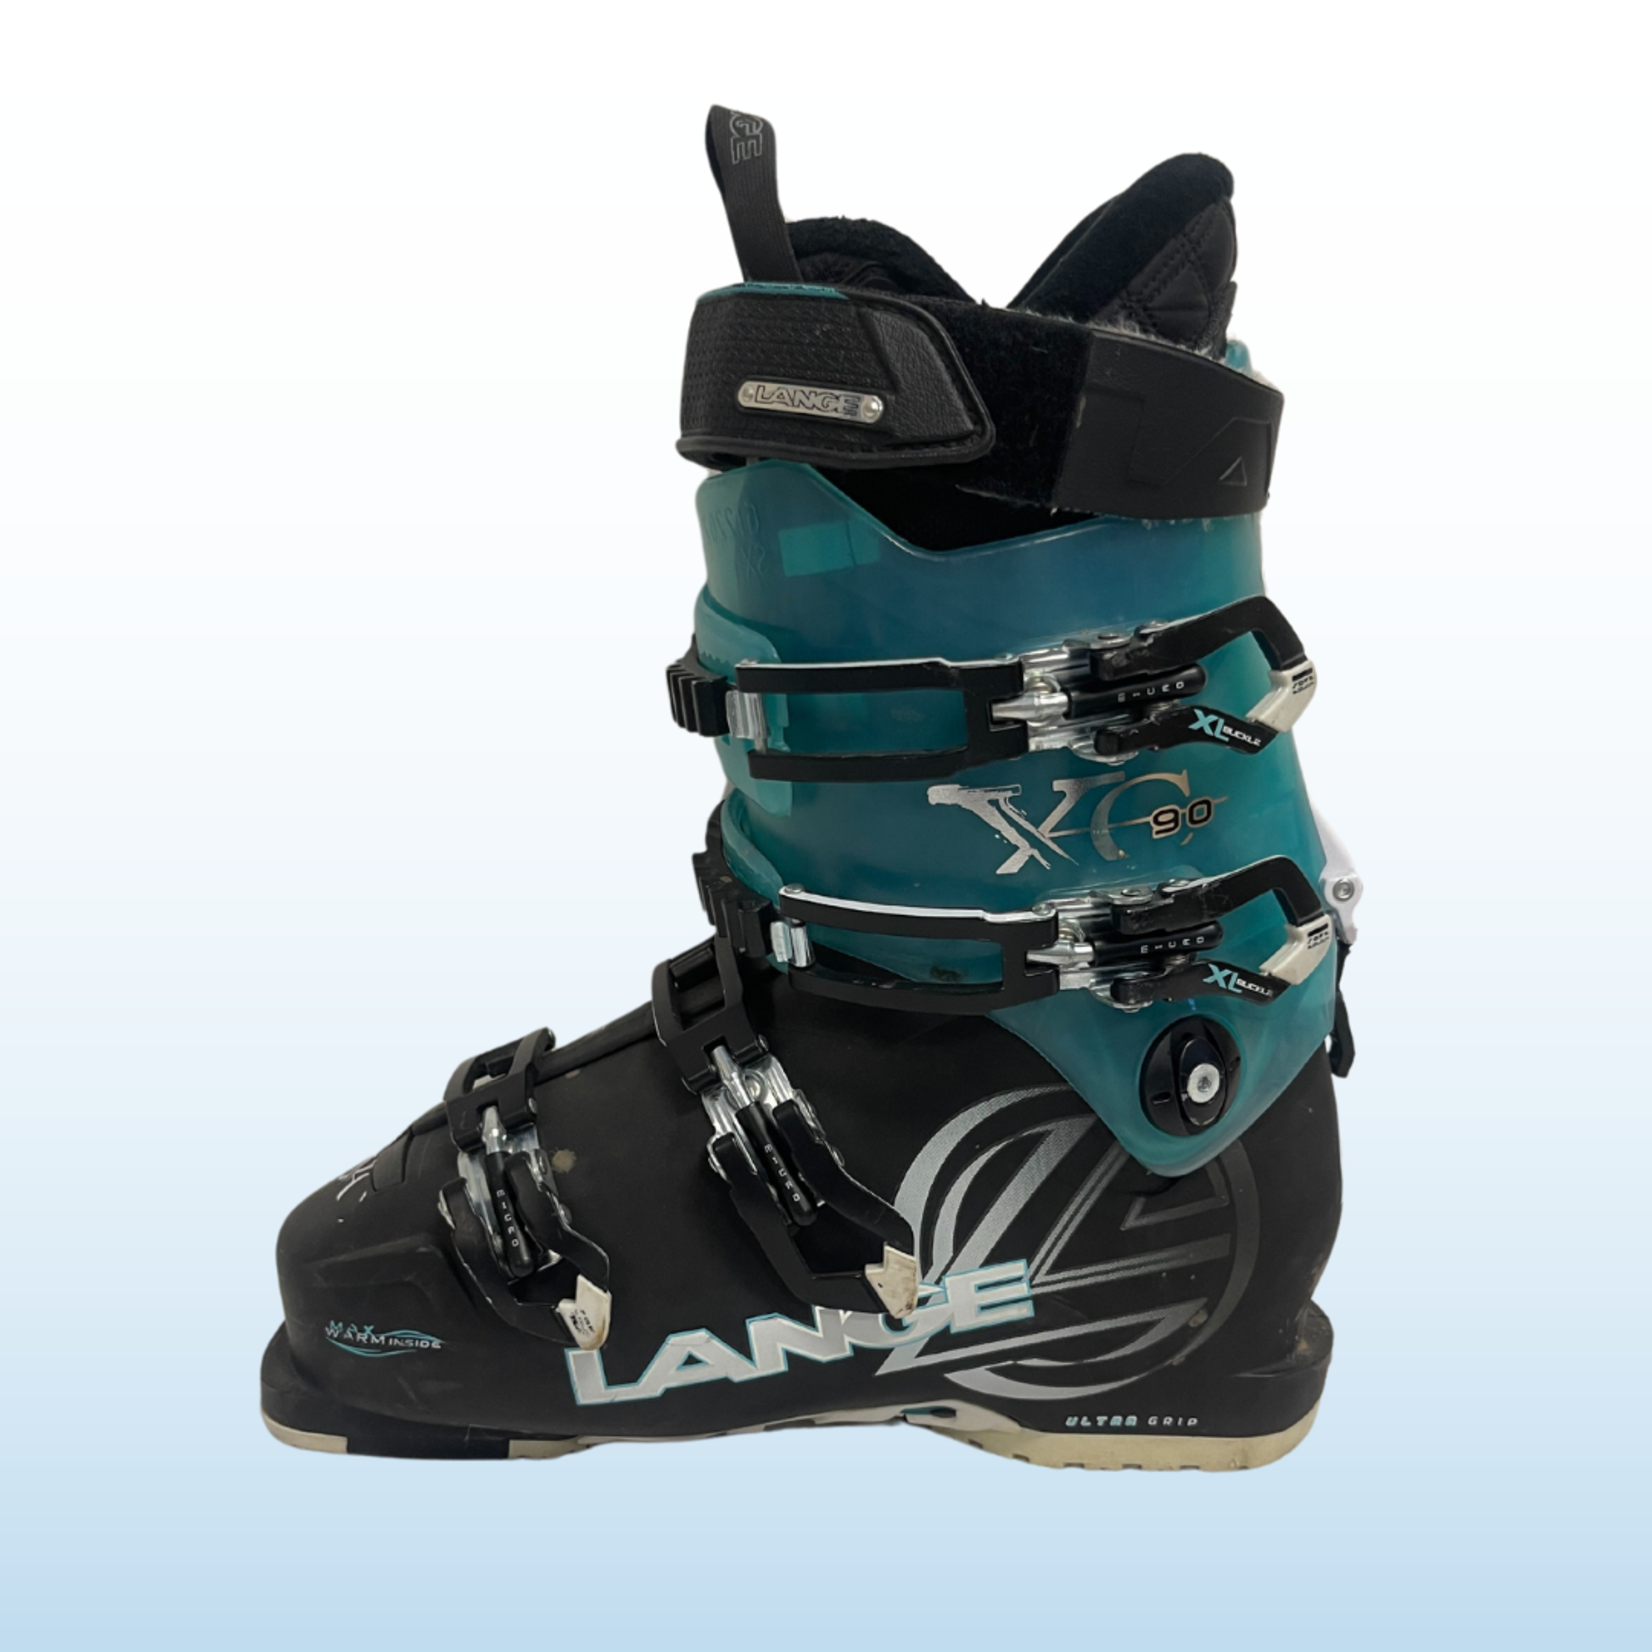 Lange Lange XC 90 Ski Boots, Size 25.5